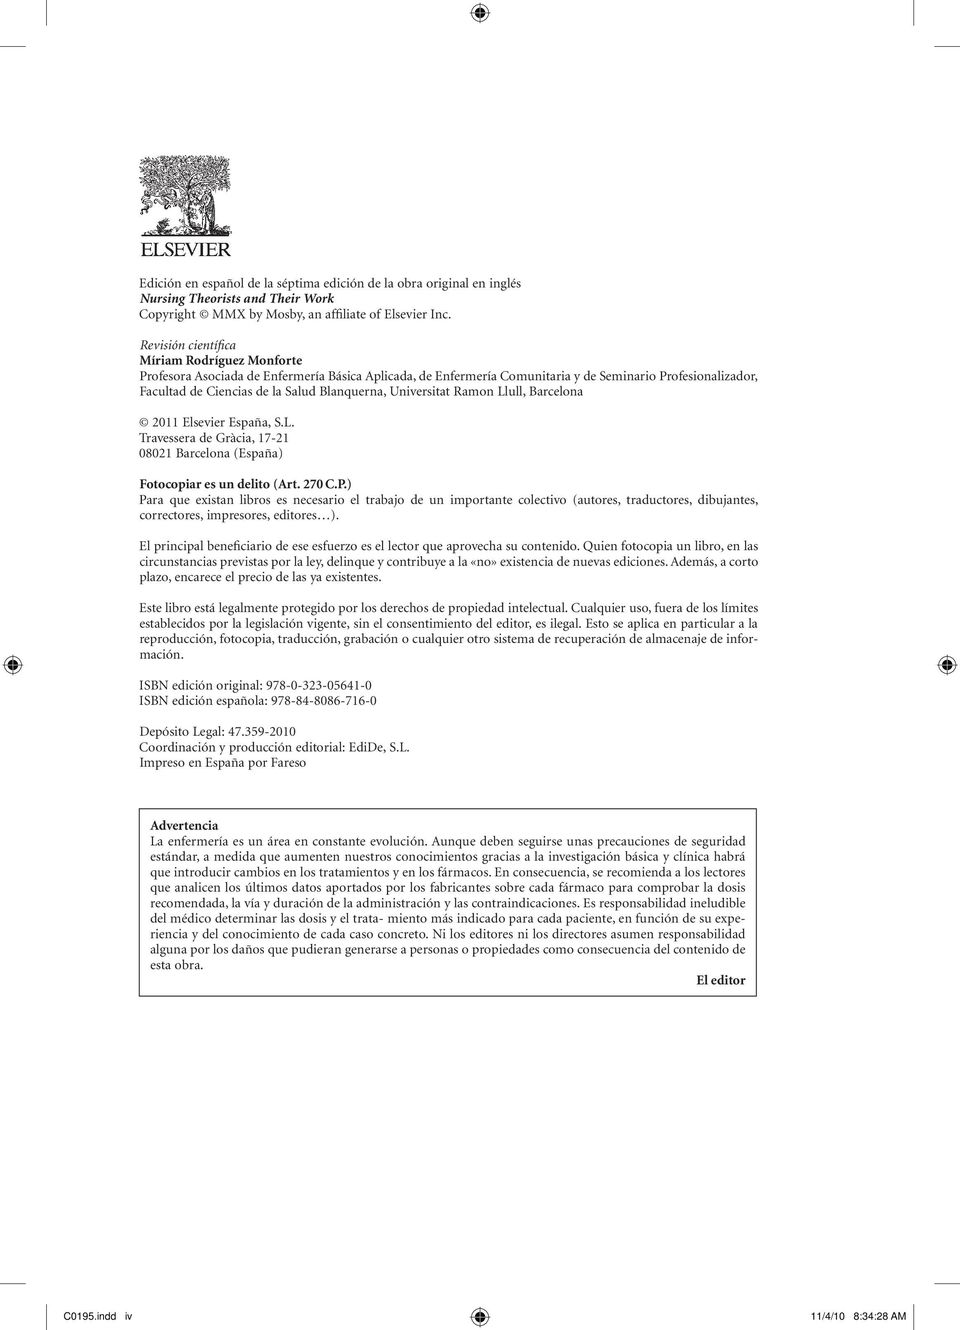 Blanquerna, Universitat Ramon Llull, Barcelona 2011 Elsevier España, S.L. Travessera de Gràcia, 17-21 08021 Barcelona (España) Fotocopiar es un delito (Art. 270 C.P.